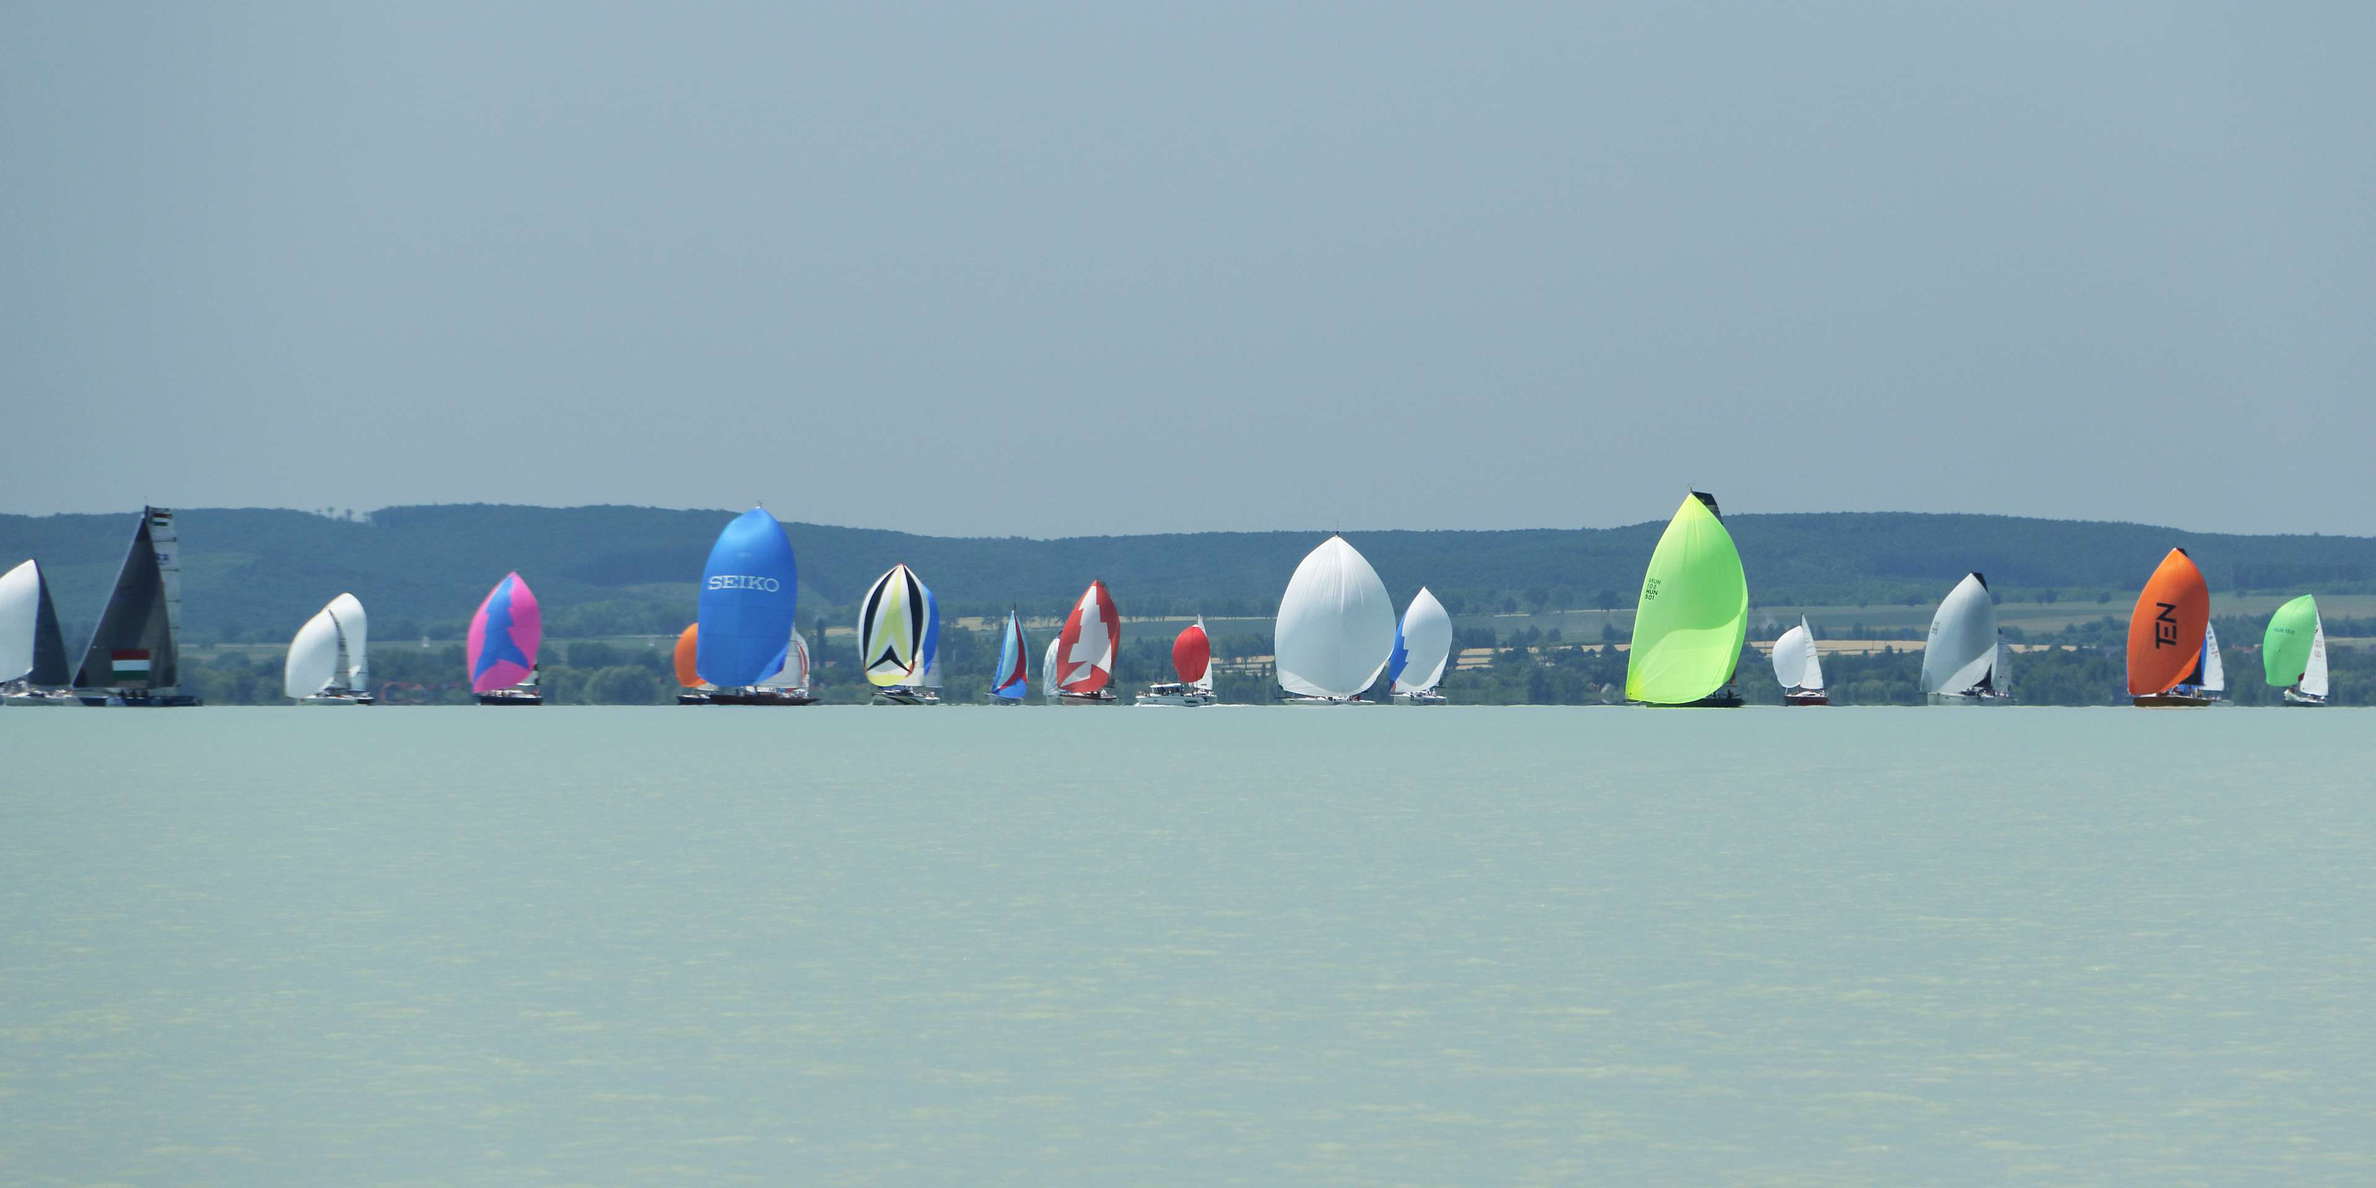 Balaton | Boat race